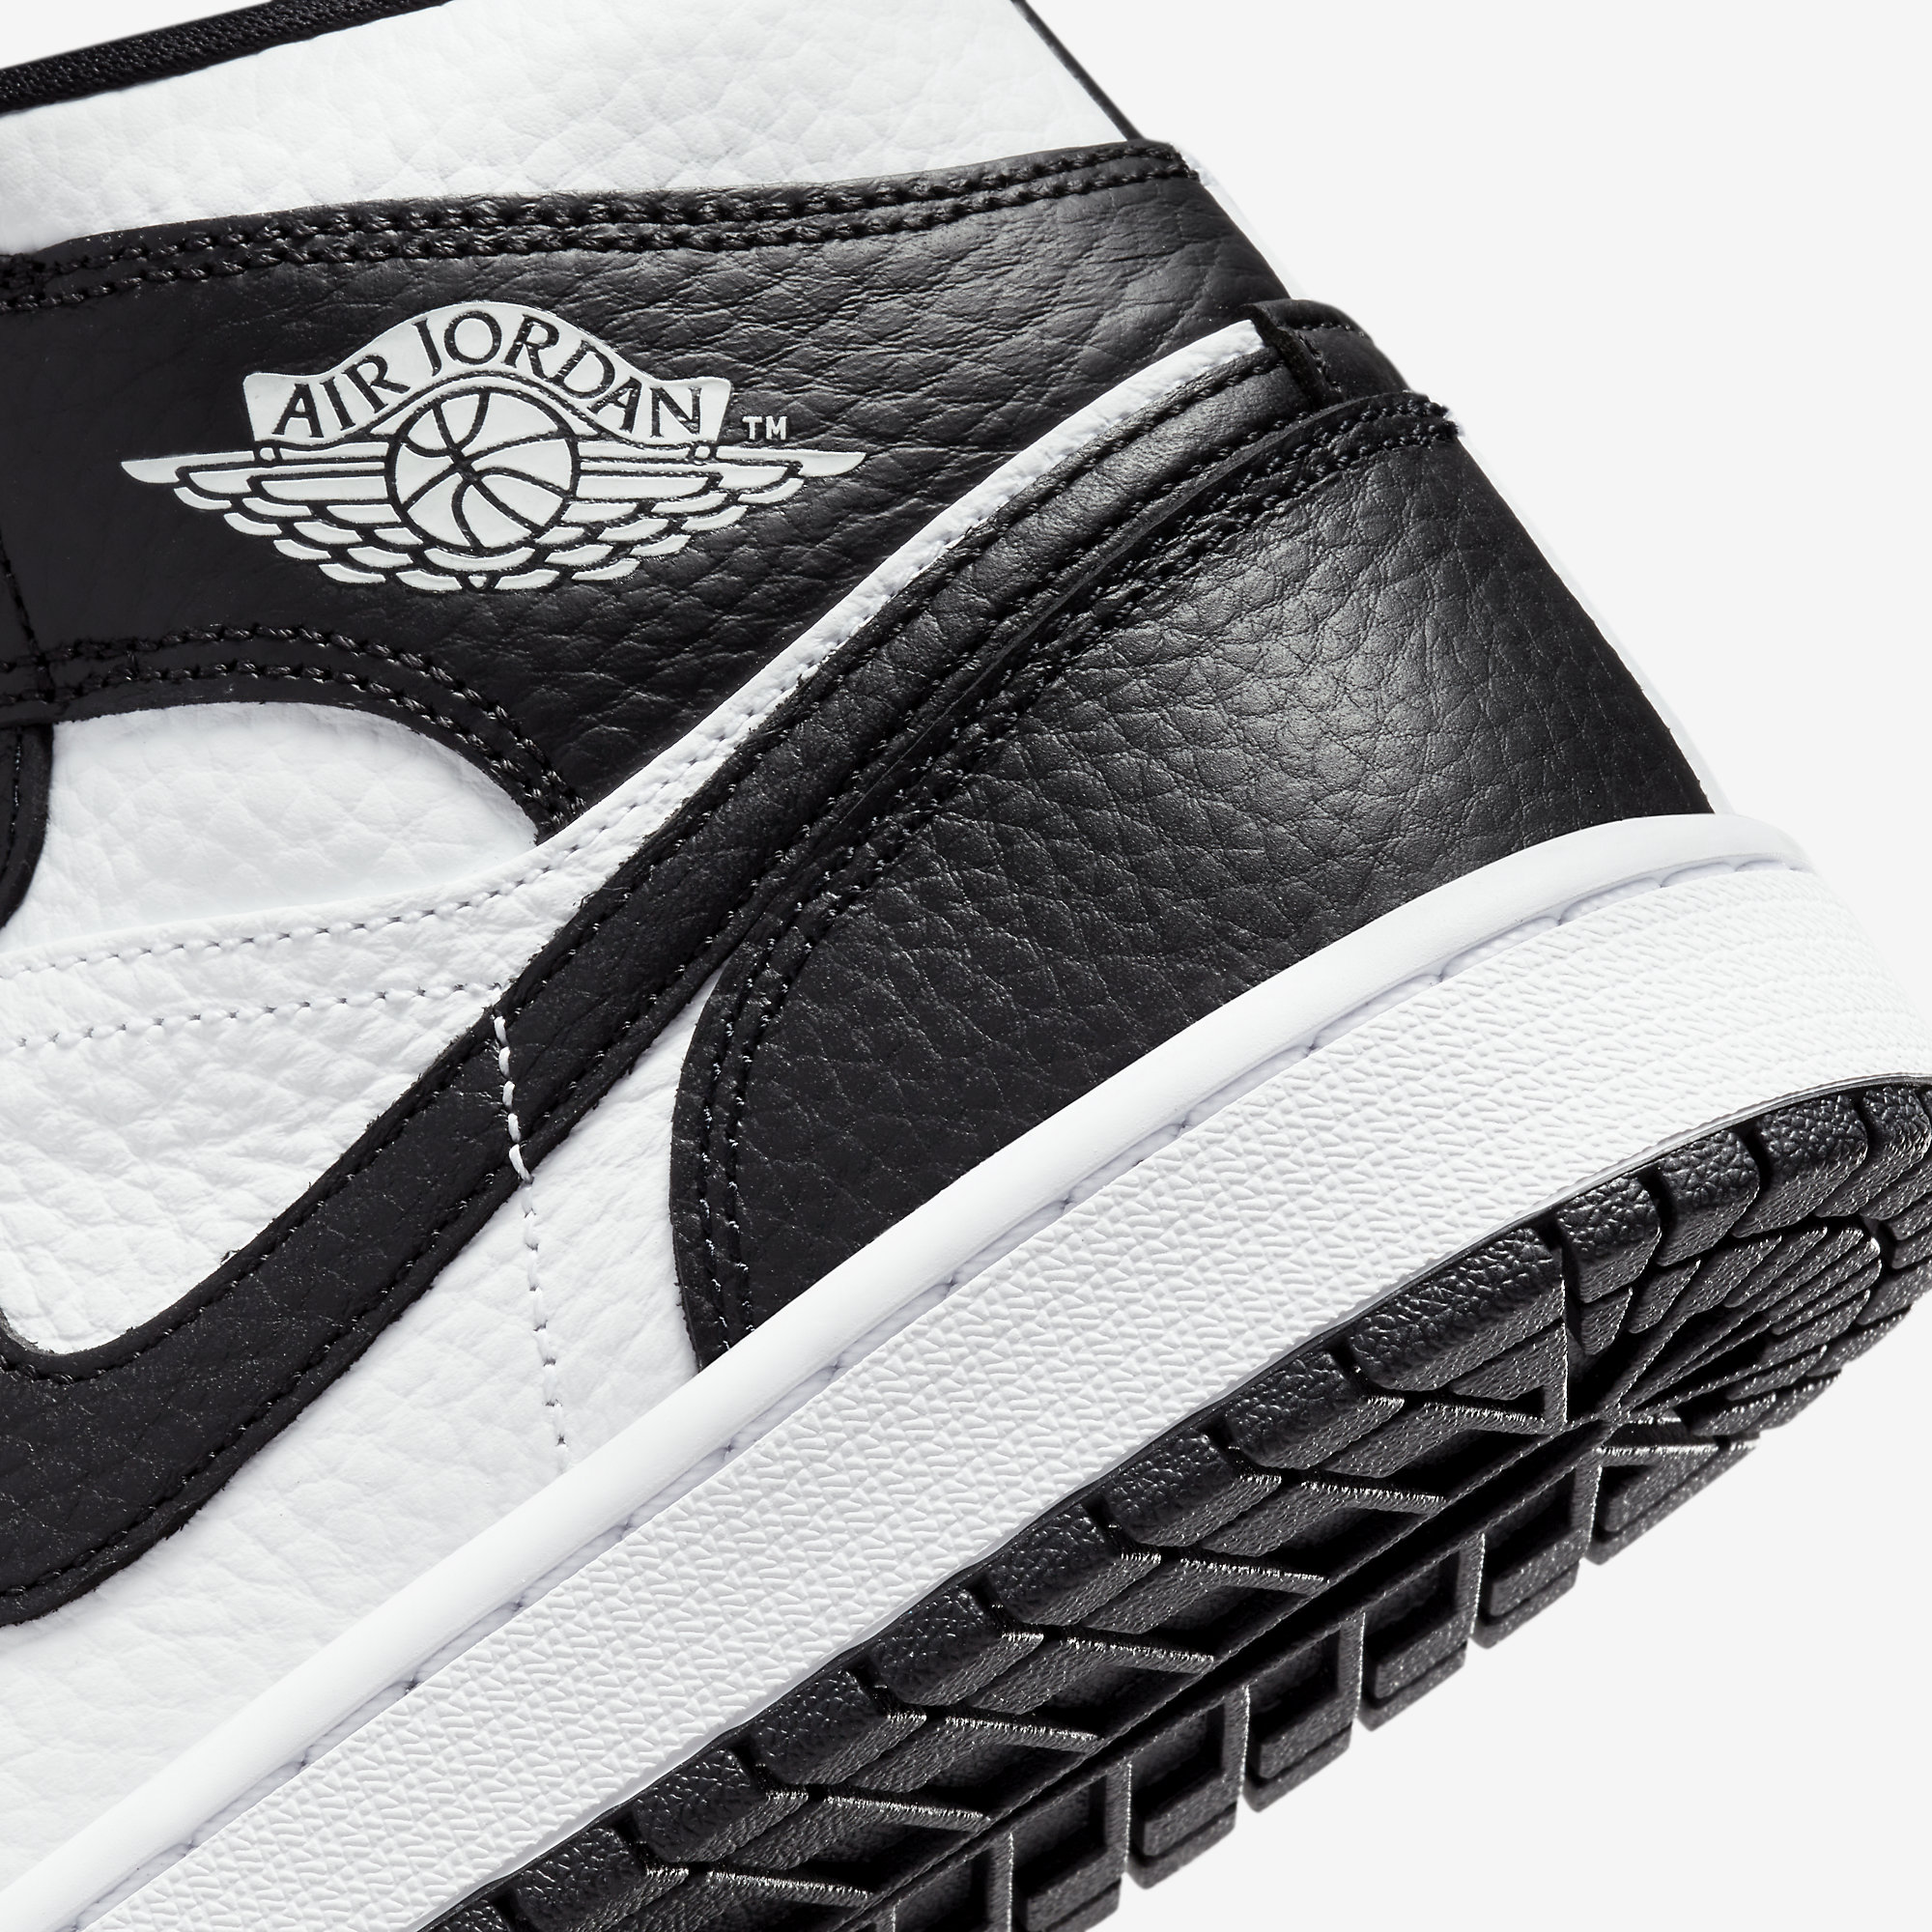 Nike Sneakers, Jordan 1 Mid ‘Split Black White’ (W)